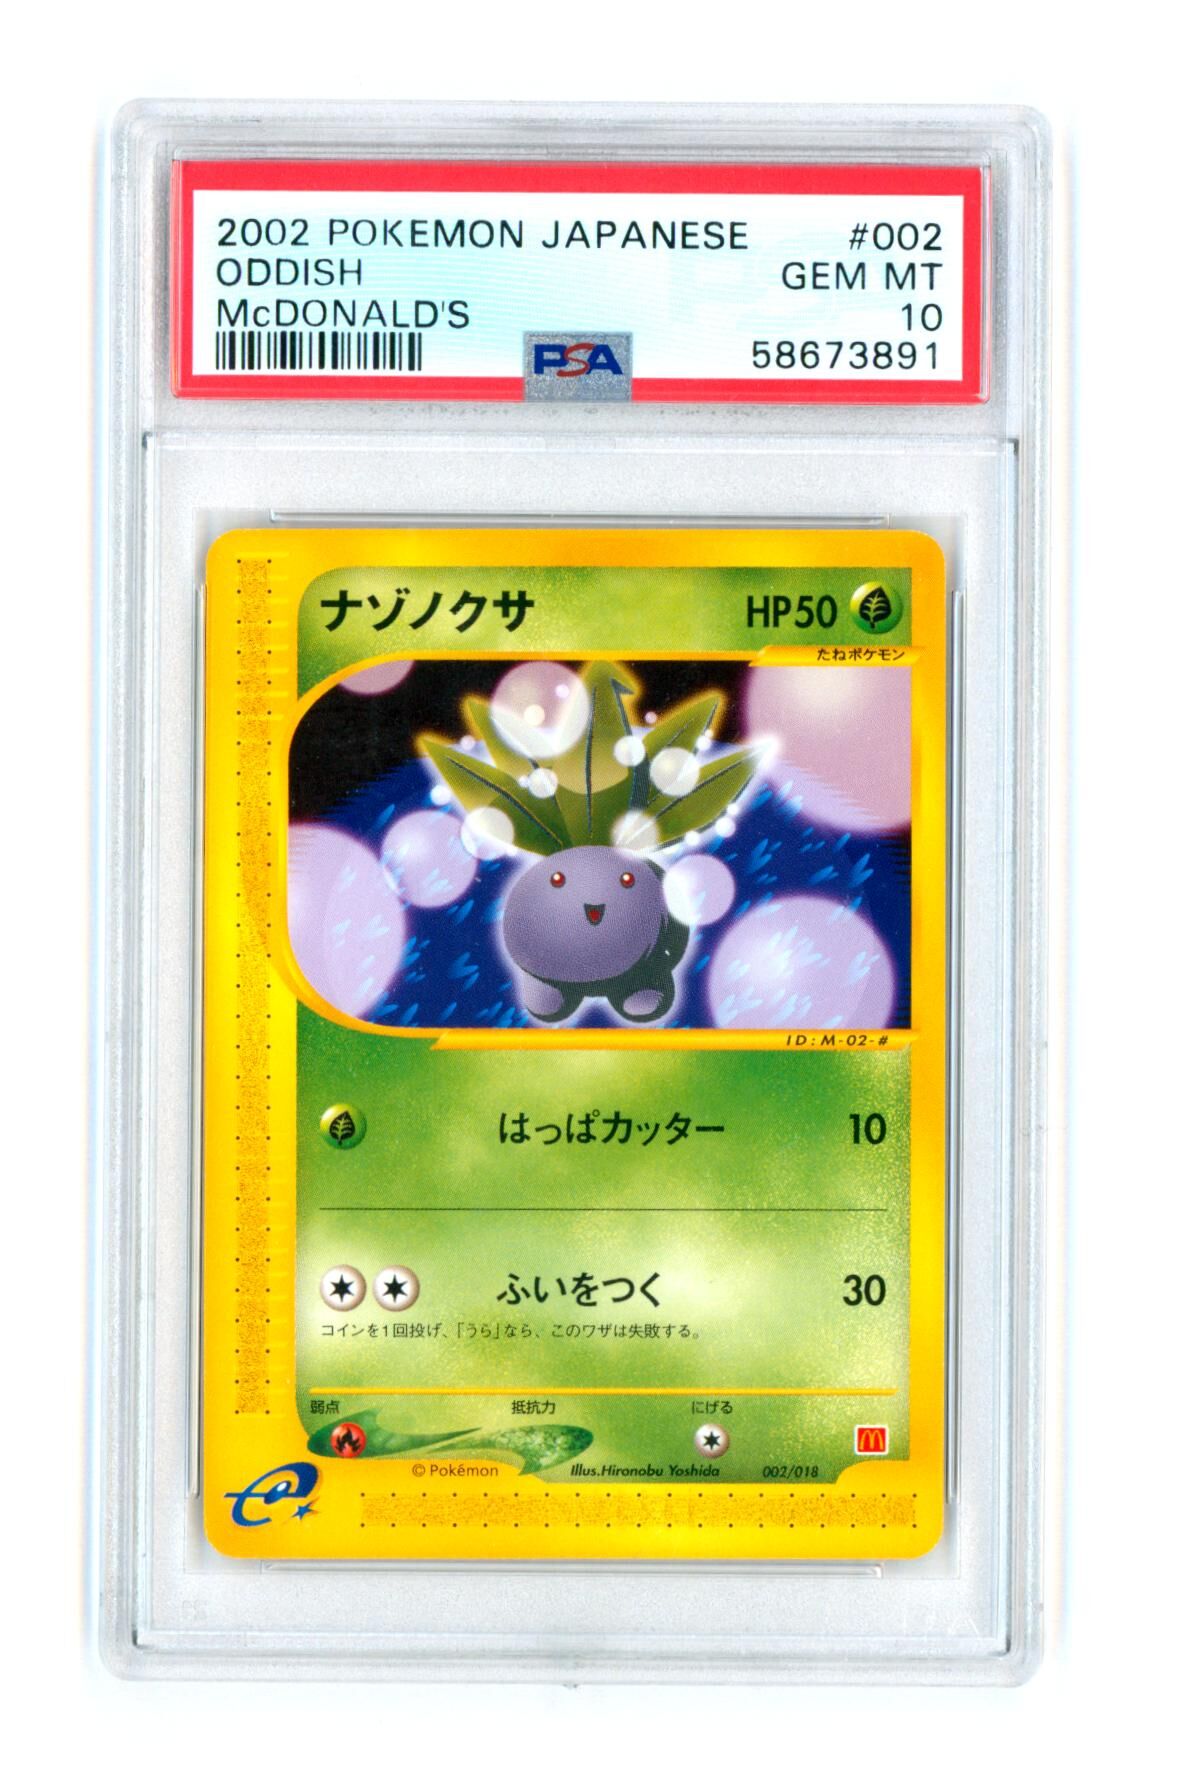 Oddish 002/018 - McDonald's - Japanese - PSA 10 GEM MT - Pokémon